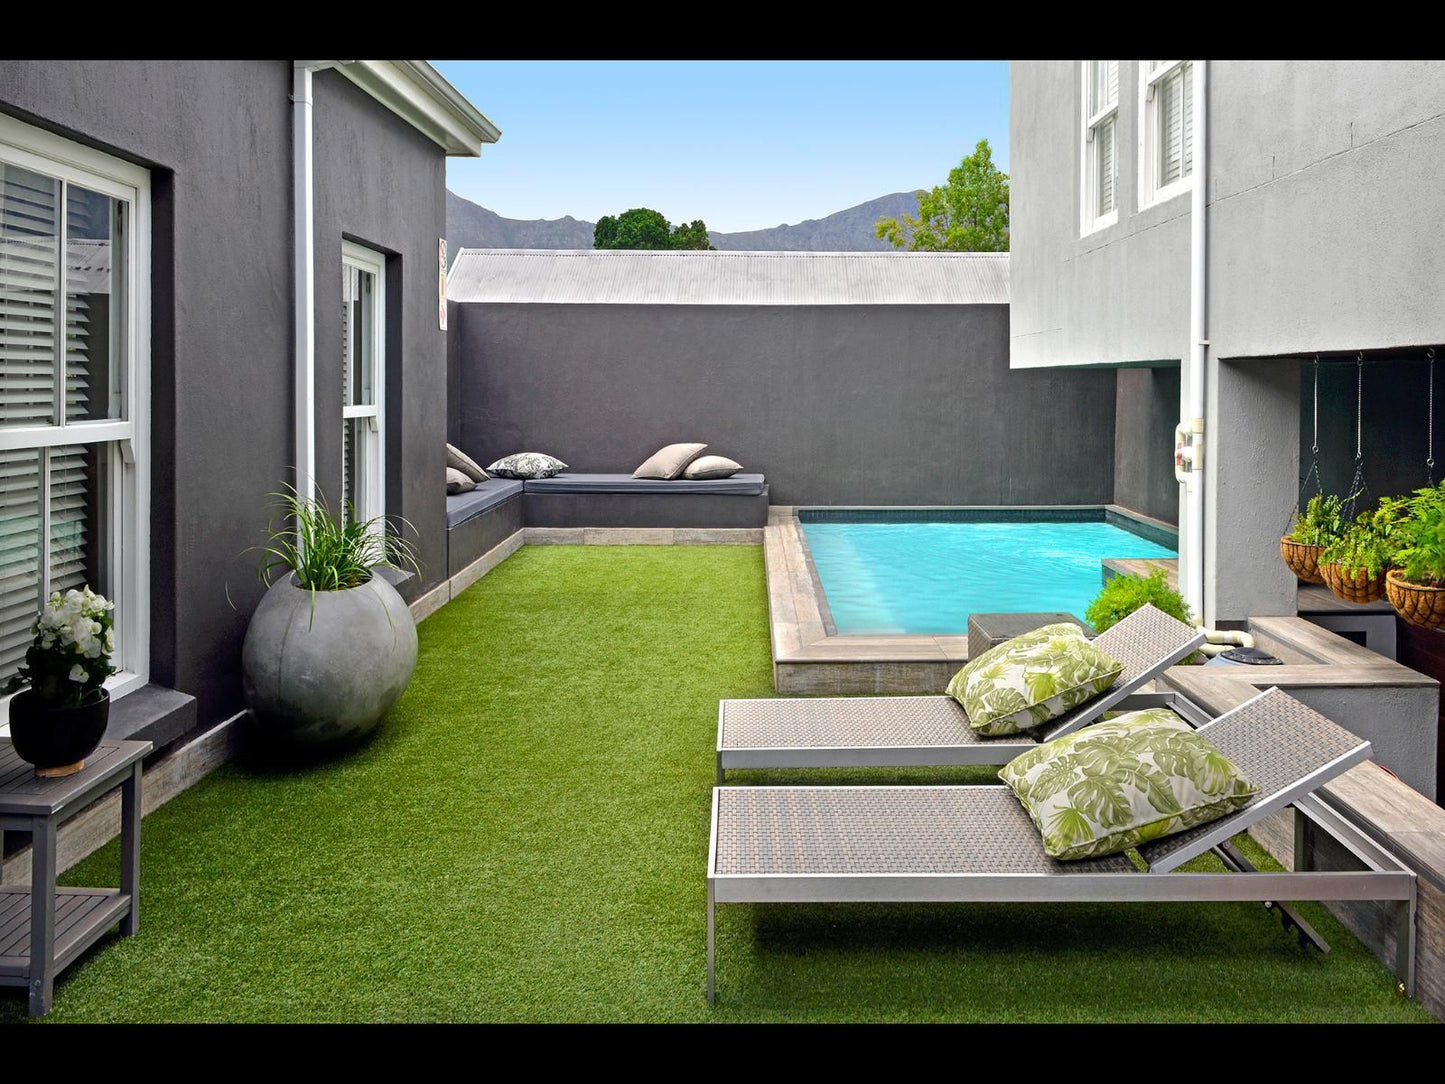 Le Petit Bijou Boutique Apartments Franschhoek Western Cape South Africa House, Building, Architecture, Garden, Nature, Plant, Swimming Pool